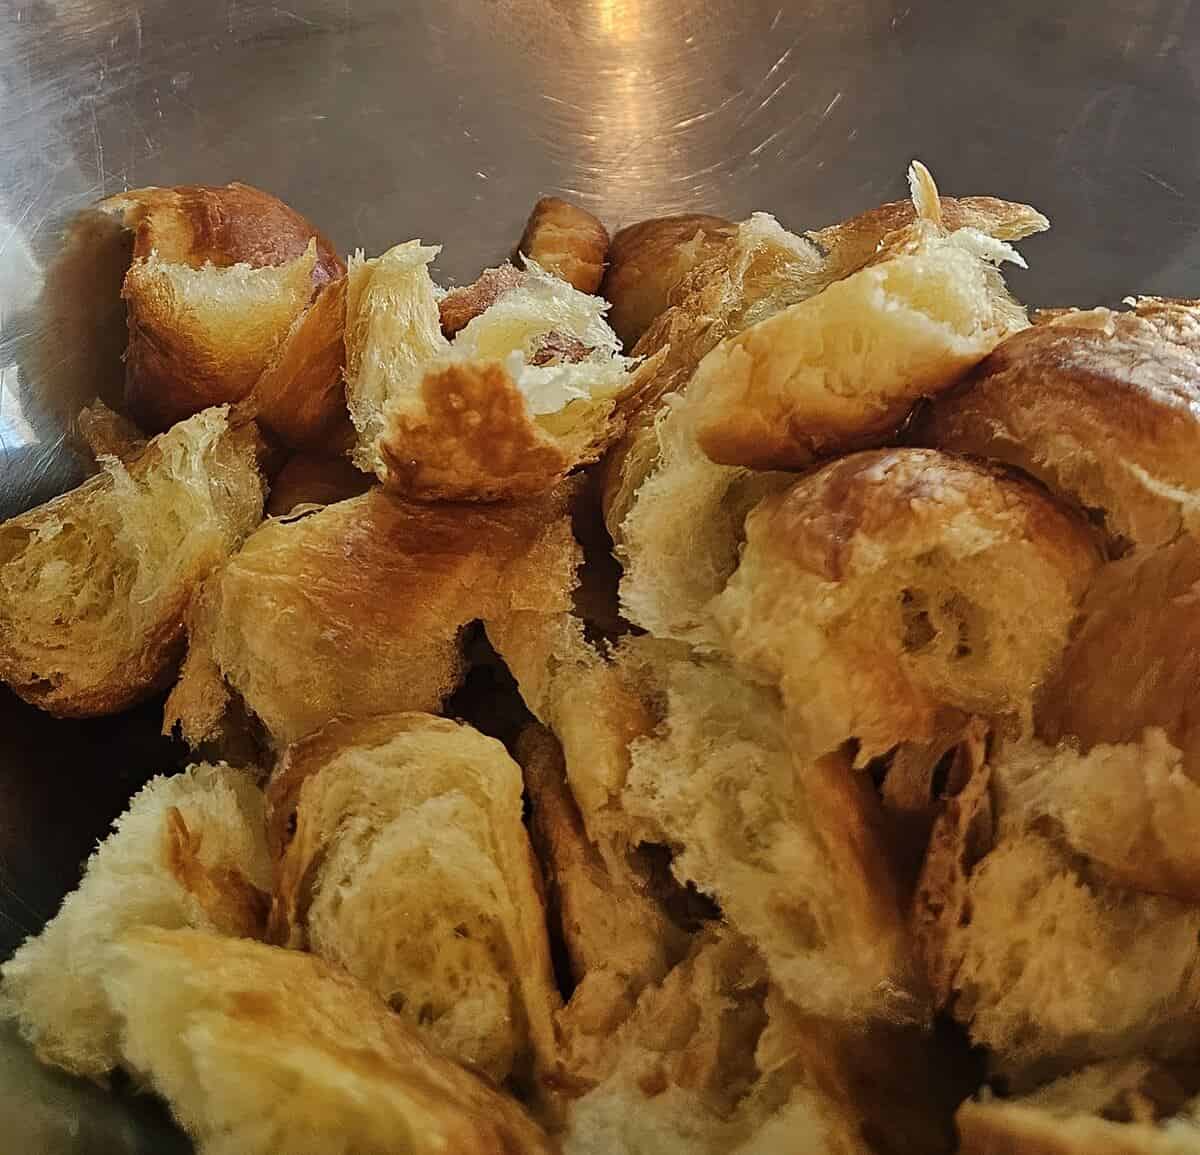 croissants torn into large pieces